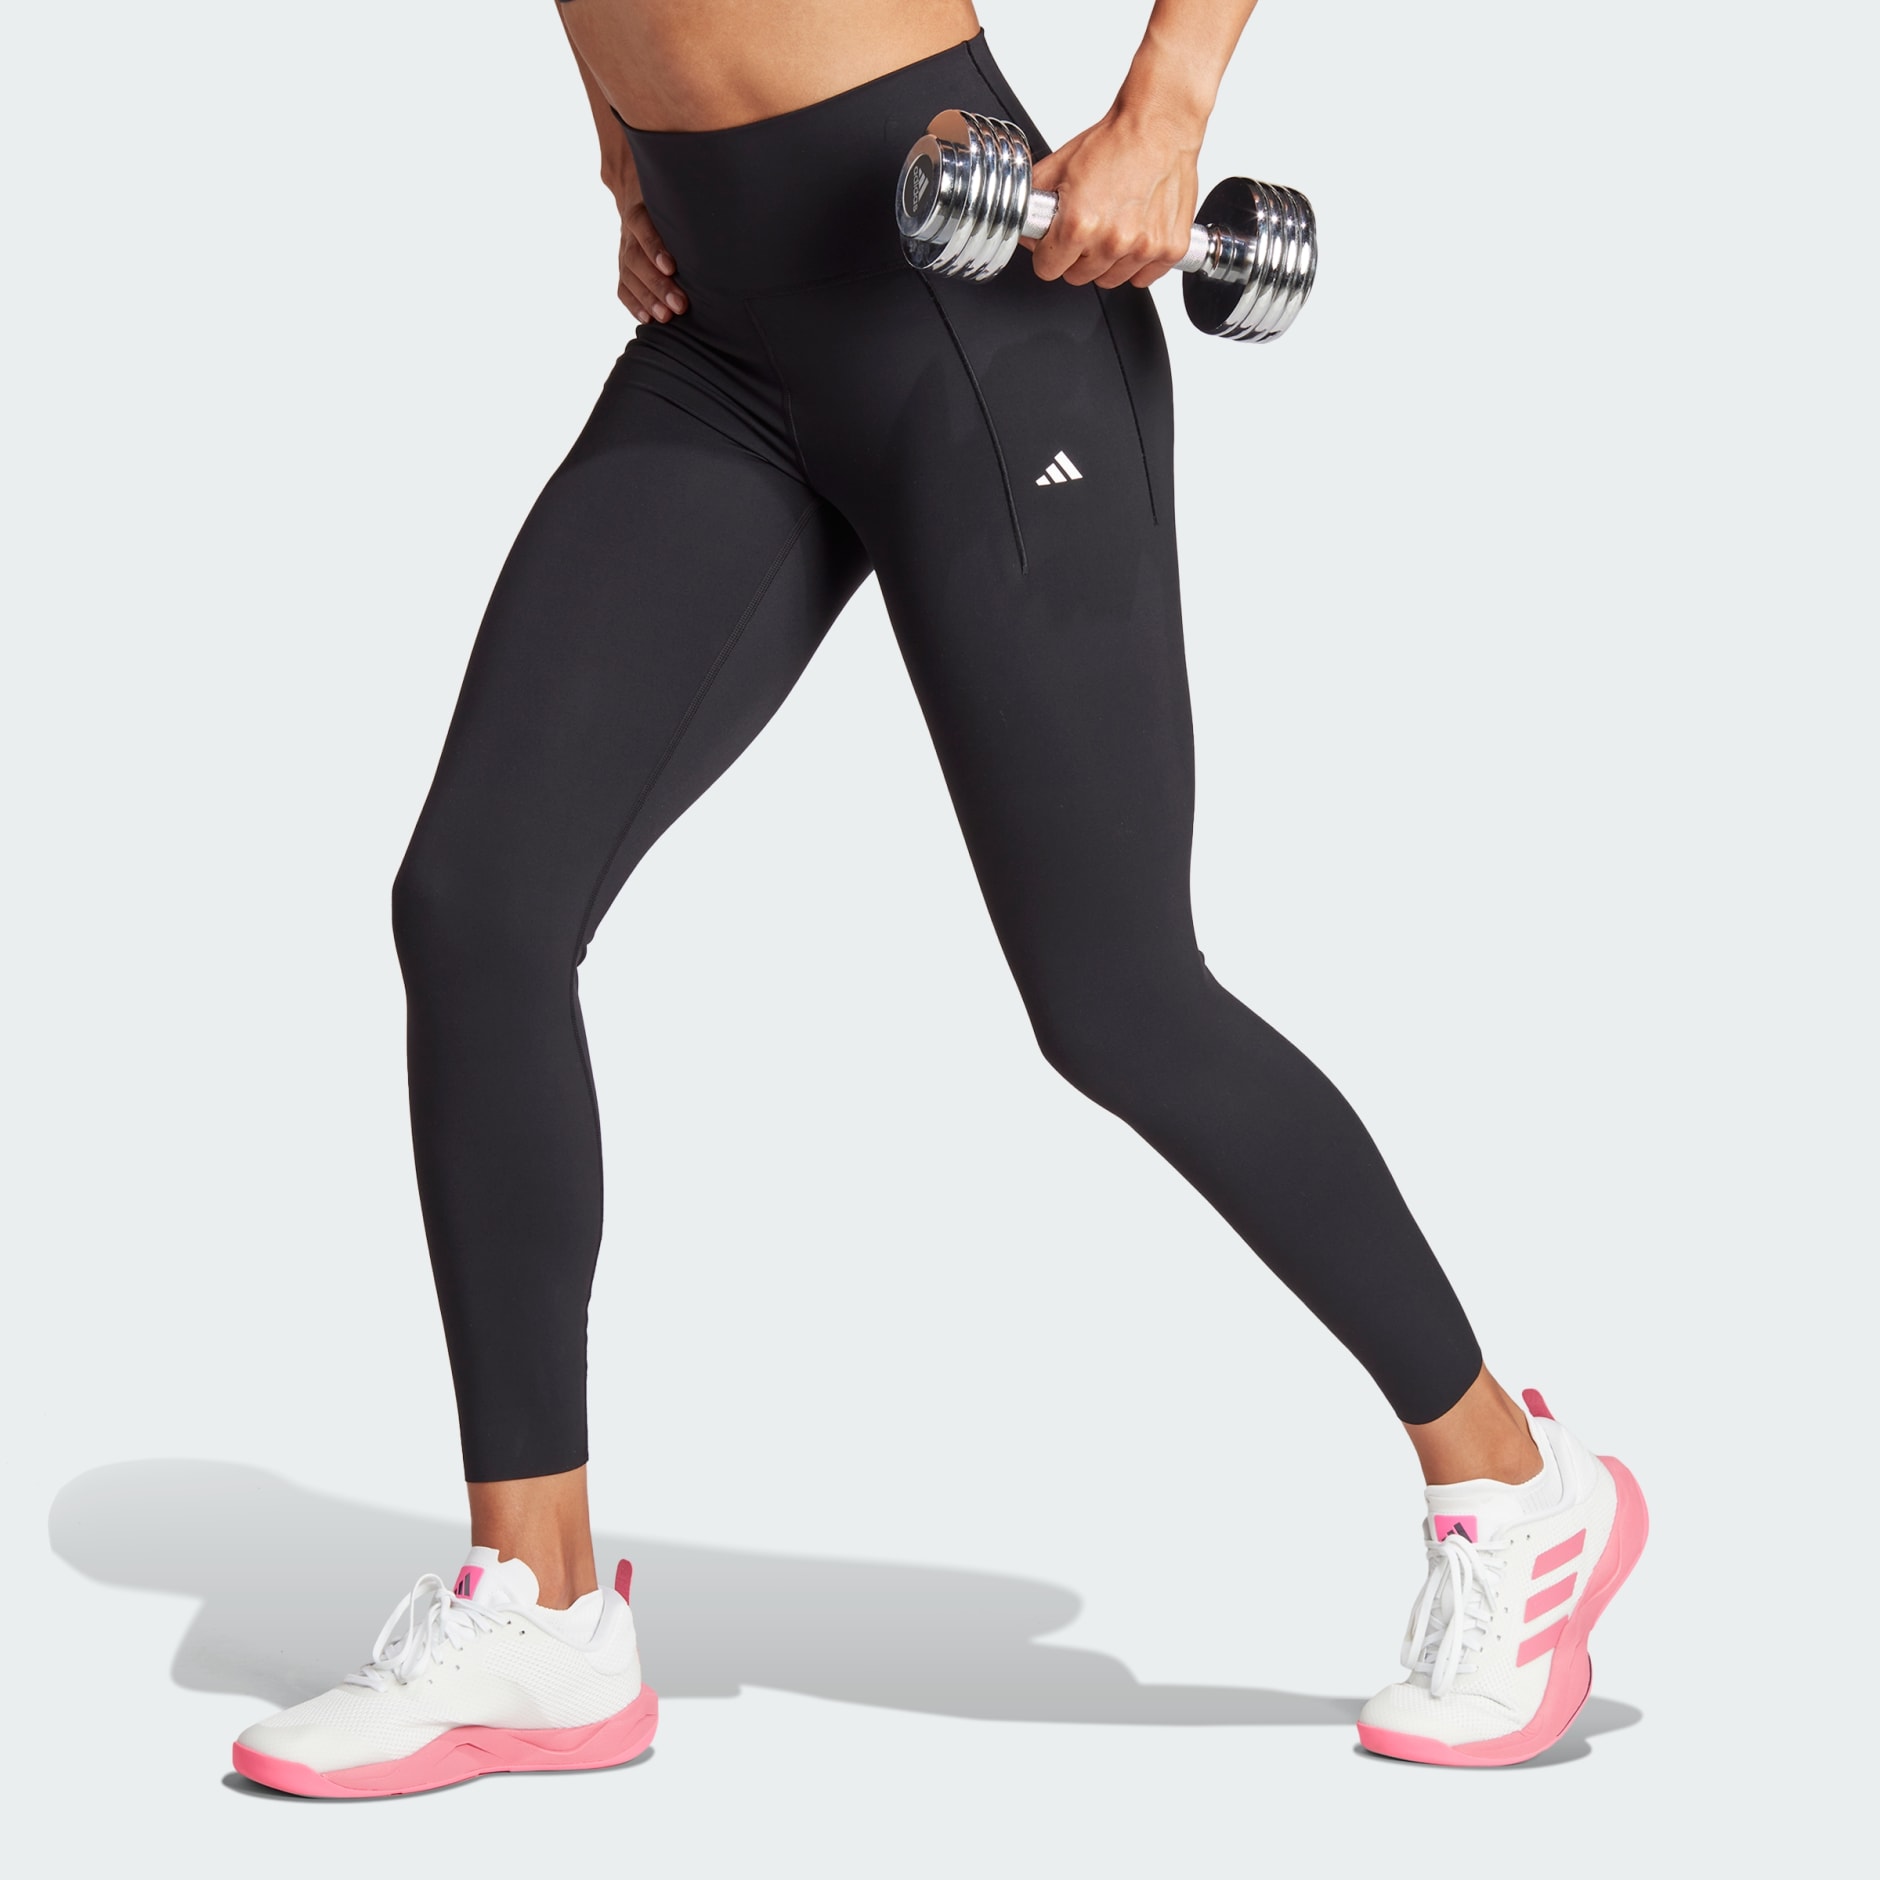 Buy Adidas Girls' Performance Tight Three Stripe Leggings - L - Black/Pink  Text at Amazon.in